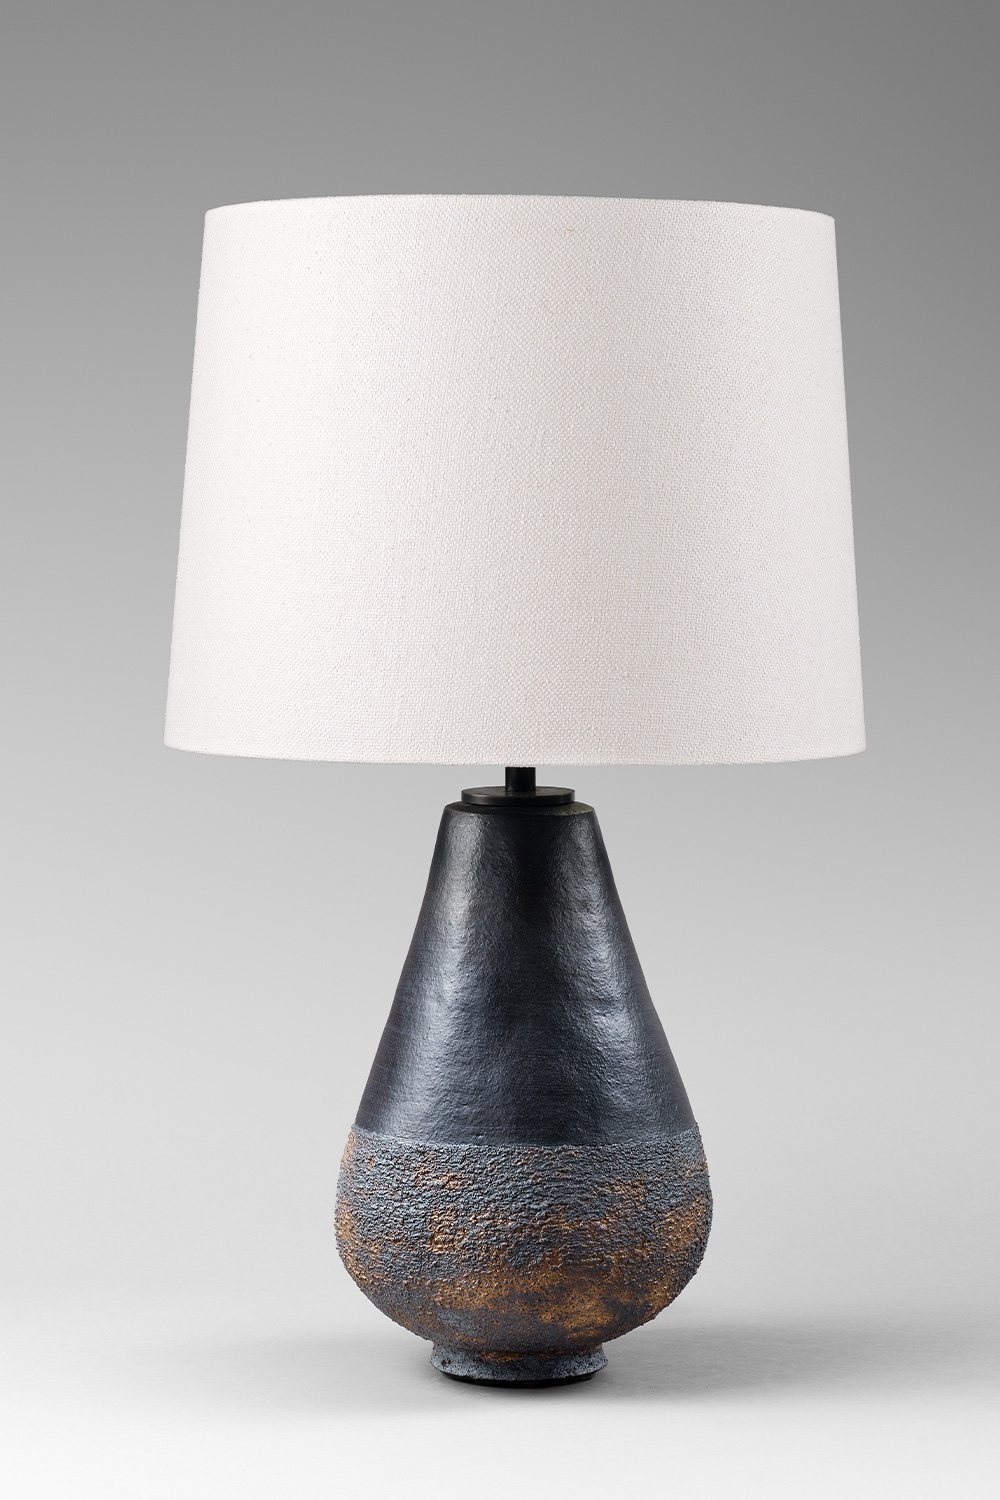 Black and bronze textured lamp